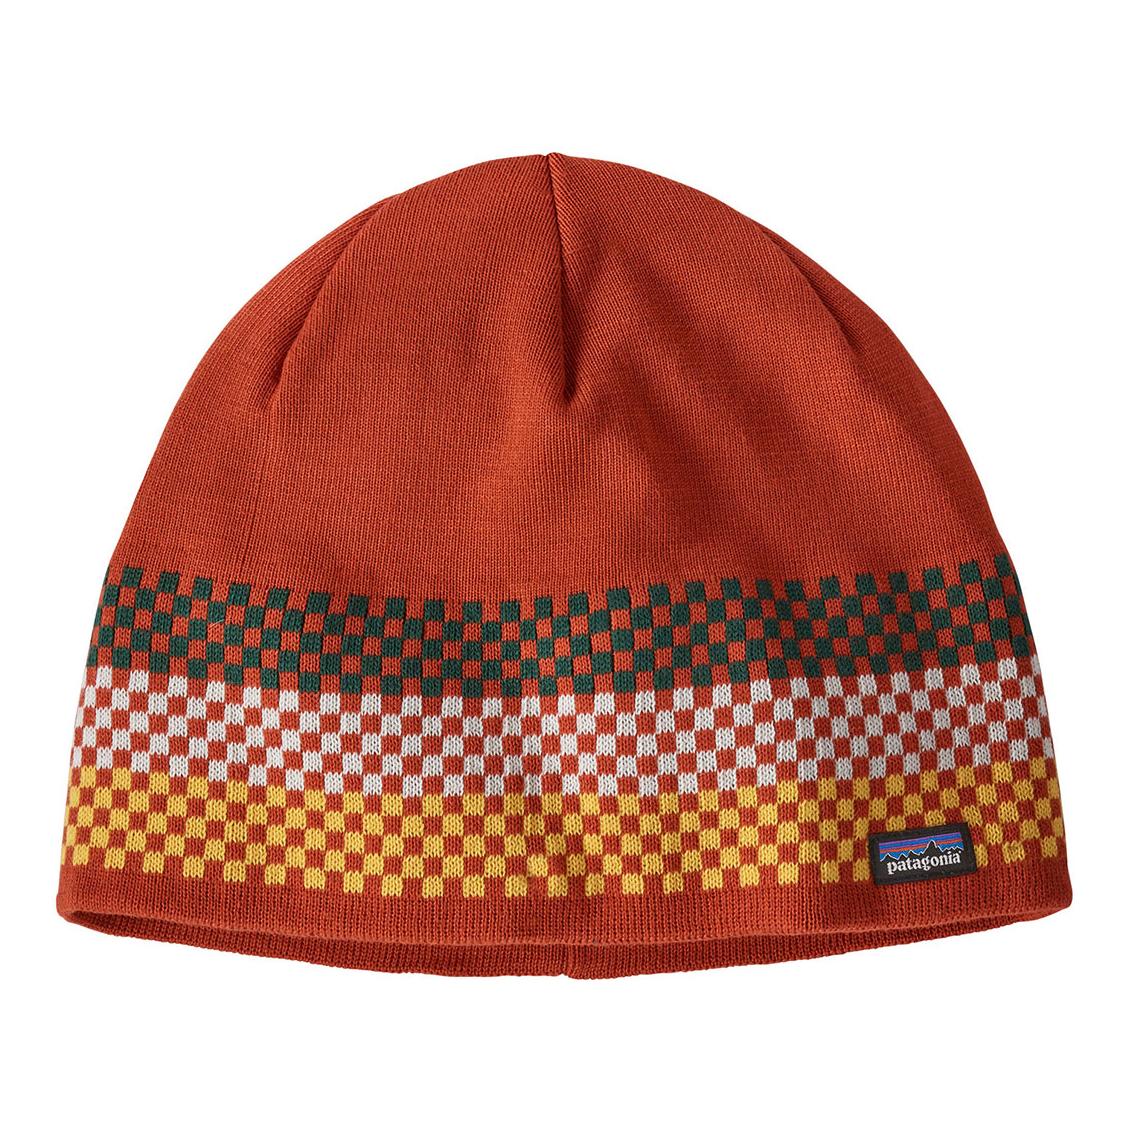 Patagonia Beanie Hat Orange 